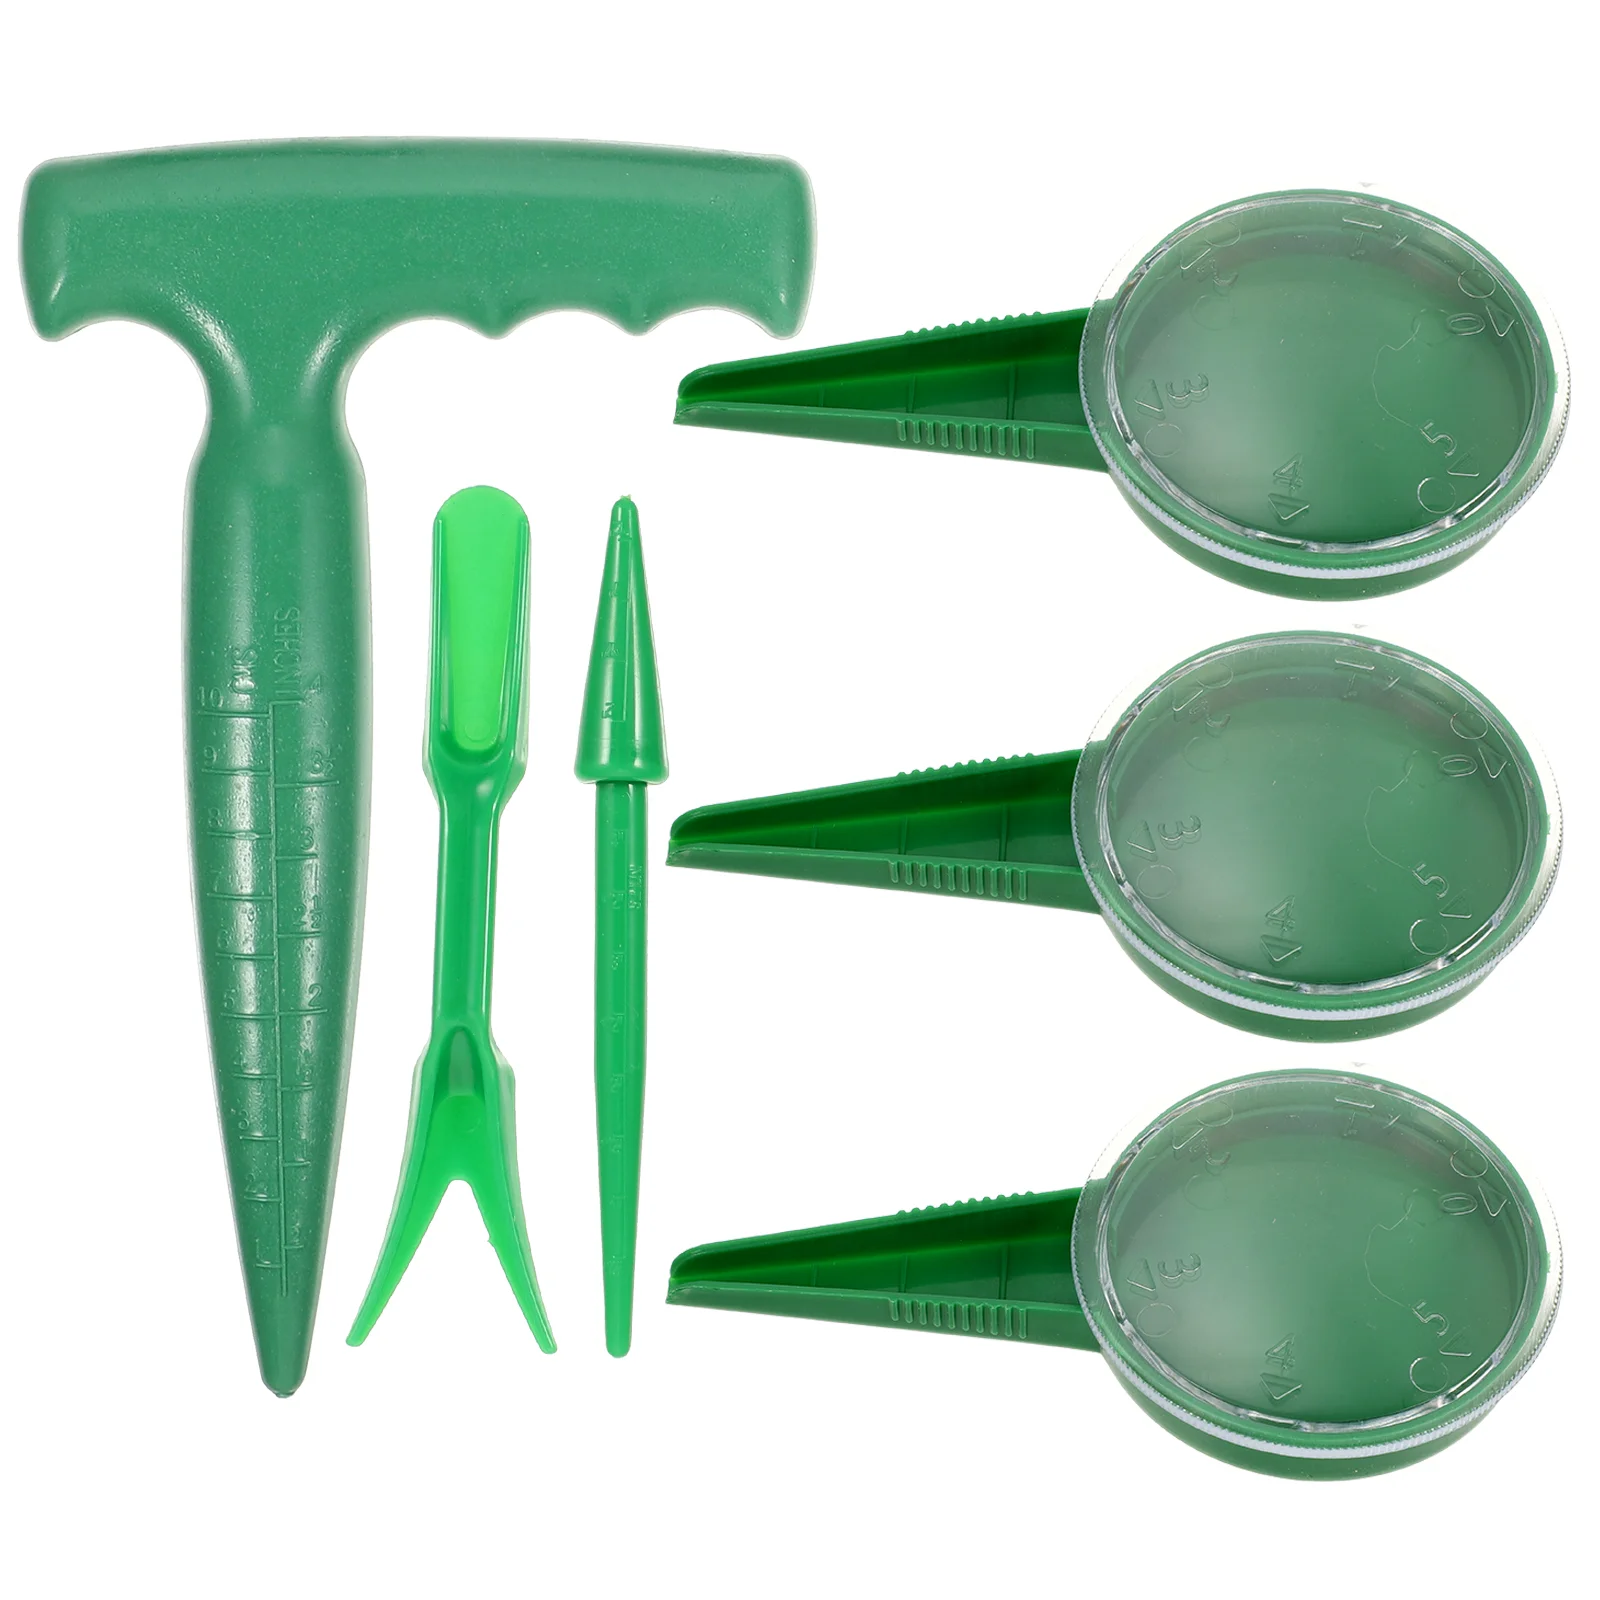 1 Set of Practical Sowing Spreaders Plastic Tool Dispenser Sower Spreaders Planter Tools